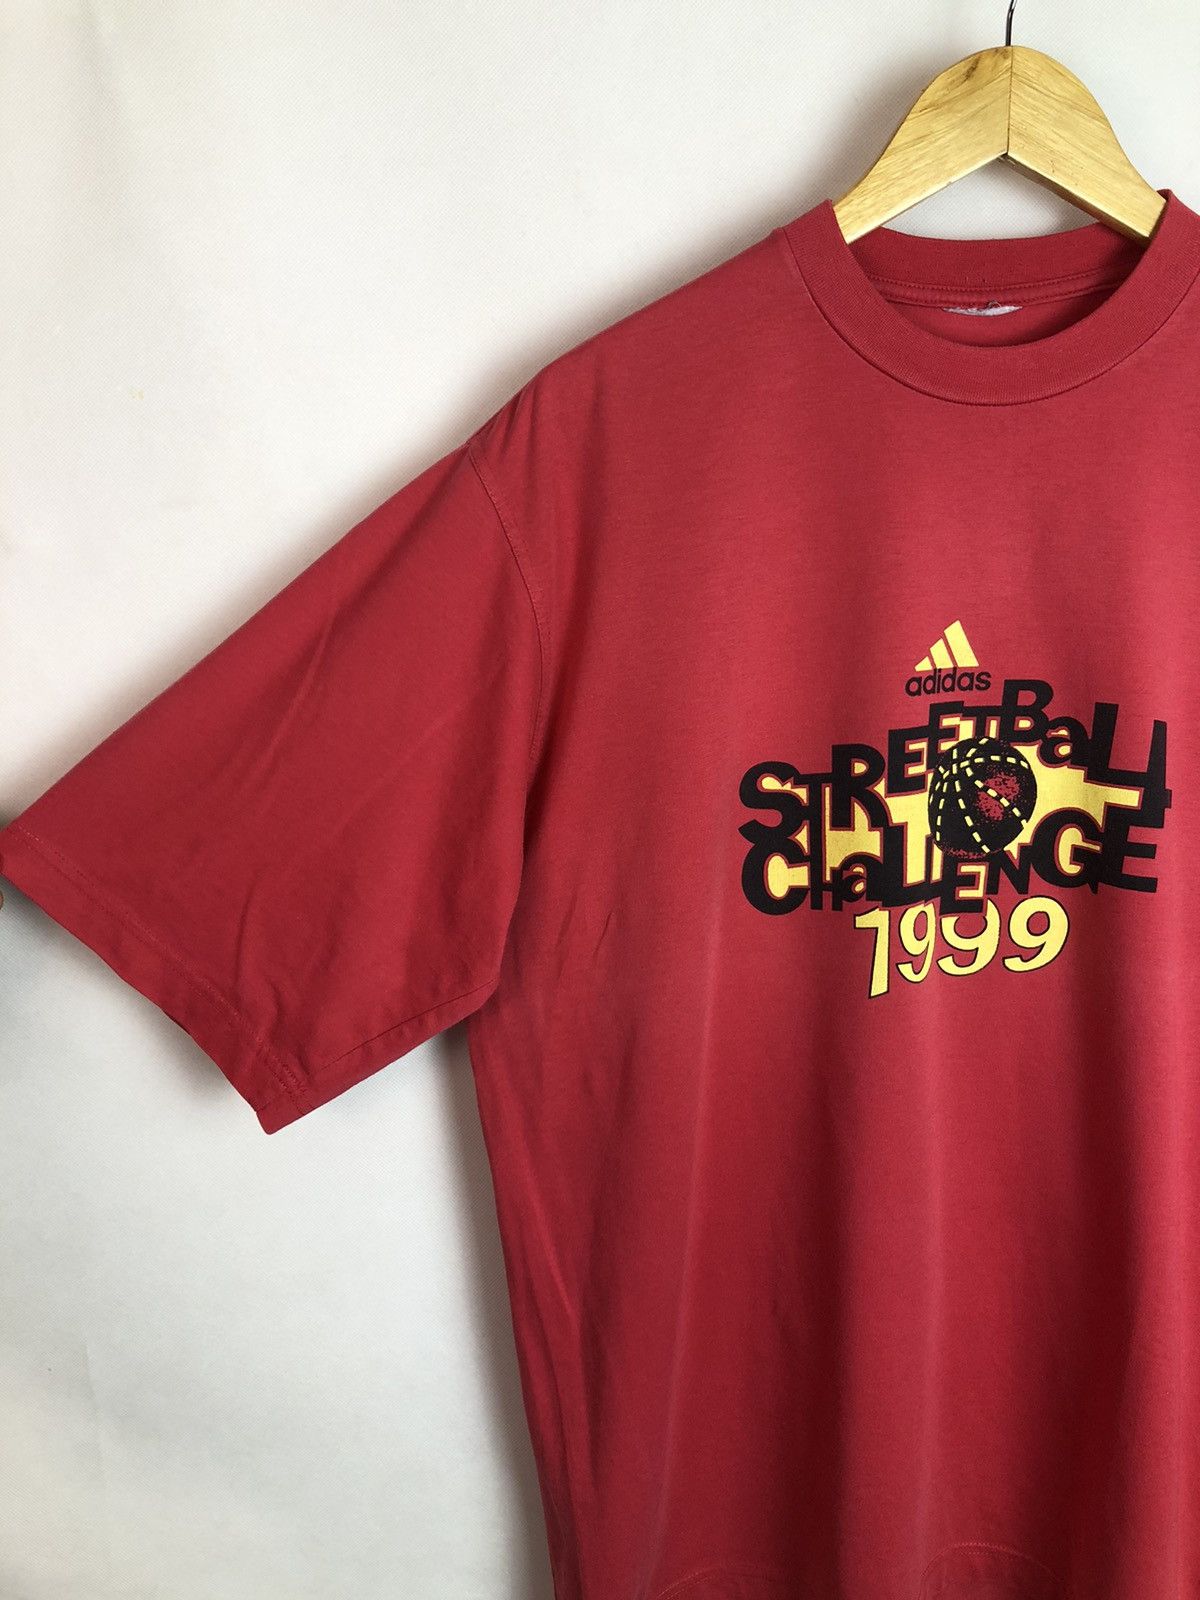 Adidas Vintage t-shirt Adidas Streetball Challenge 1999s original Size US XL / EU 56 / 4 - 3 Thumbnail